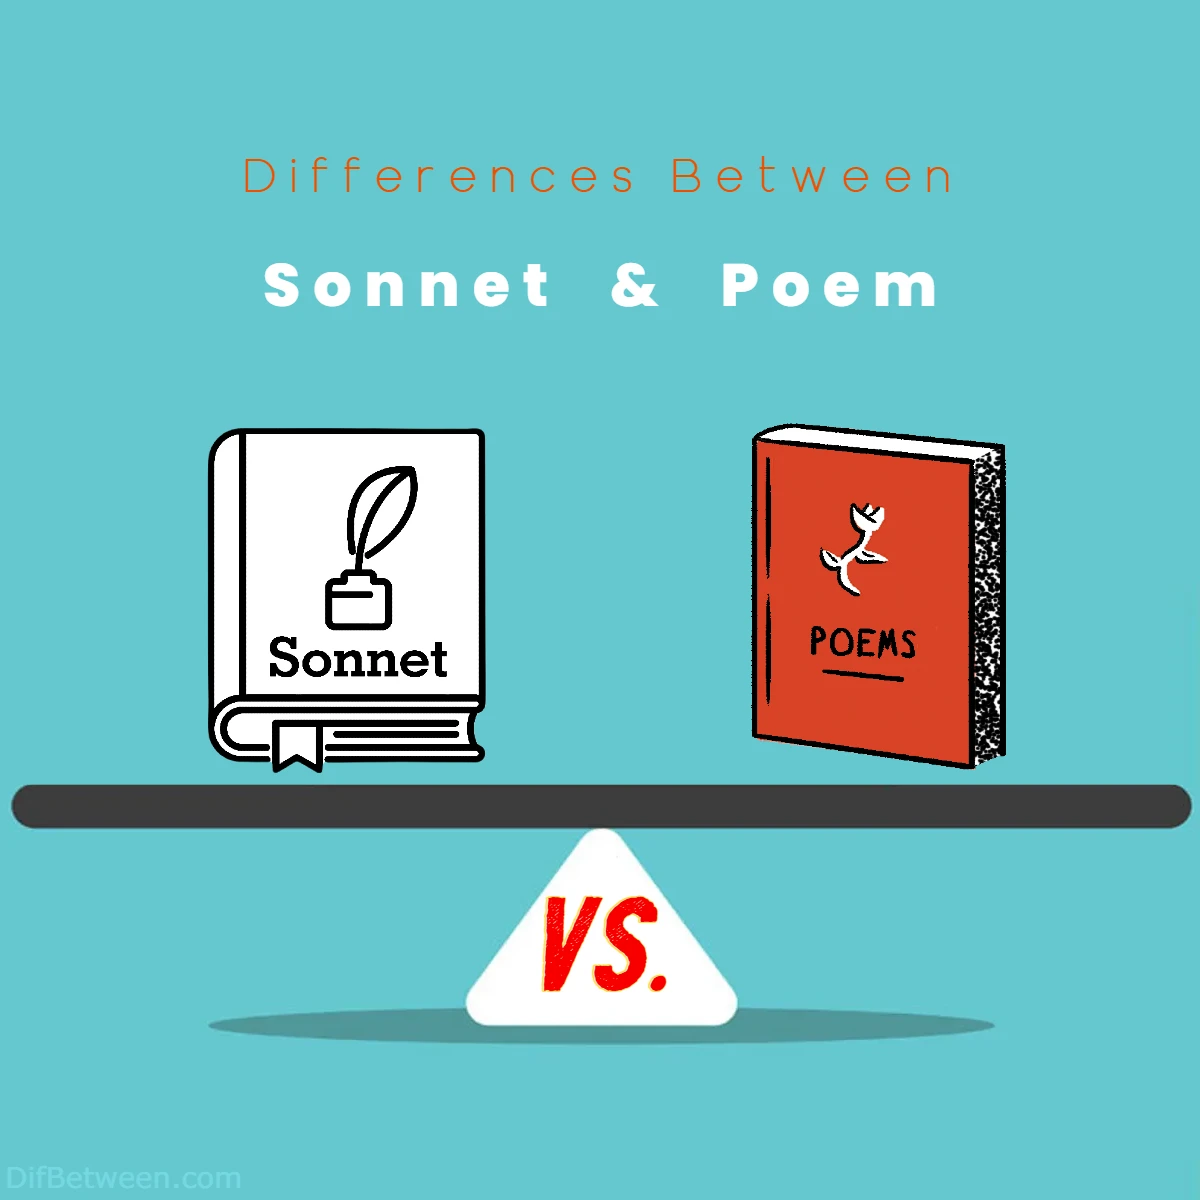 Differences Between Sonnet vs Poem